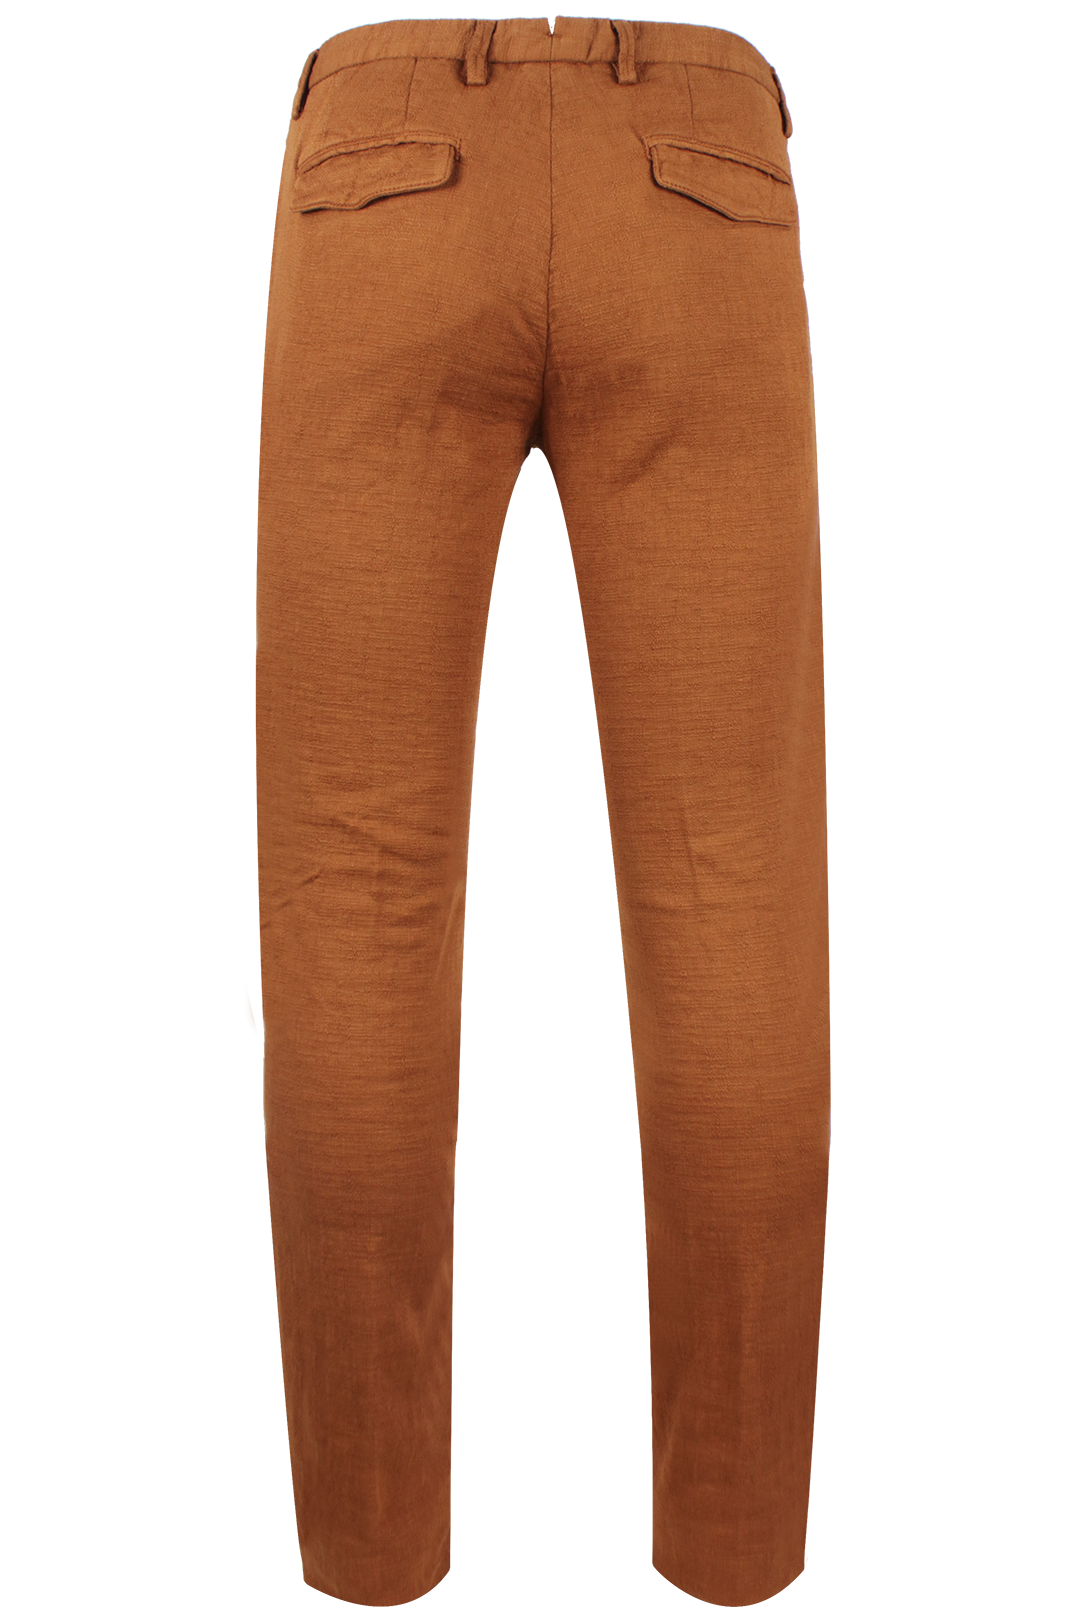 Pantalone pince cotone tinto capo arancio retro